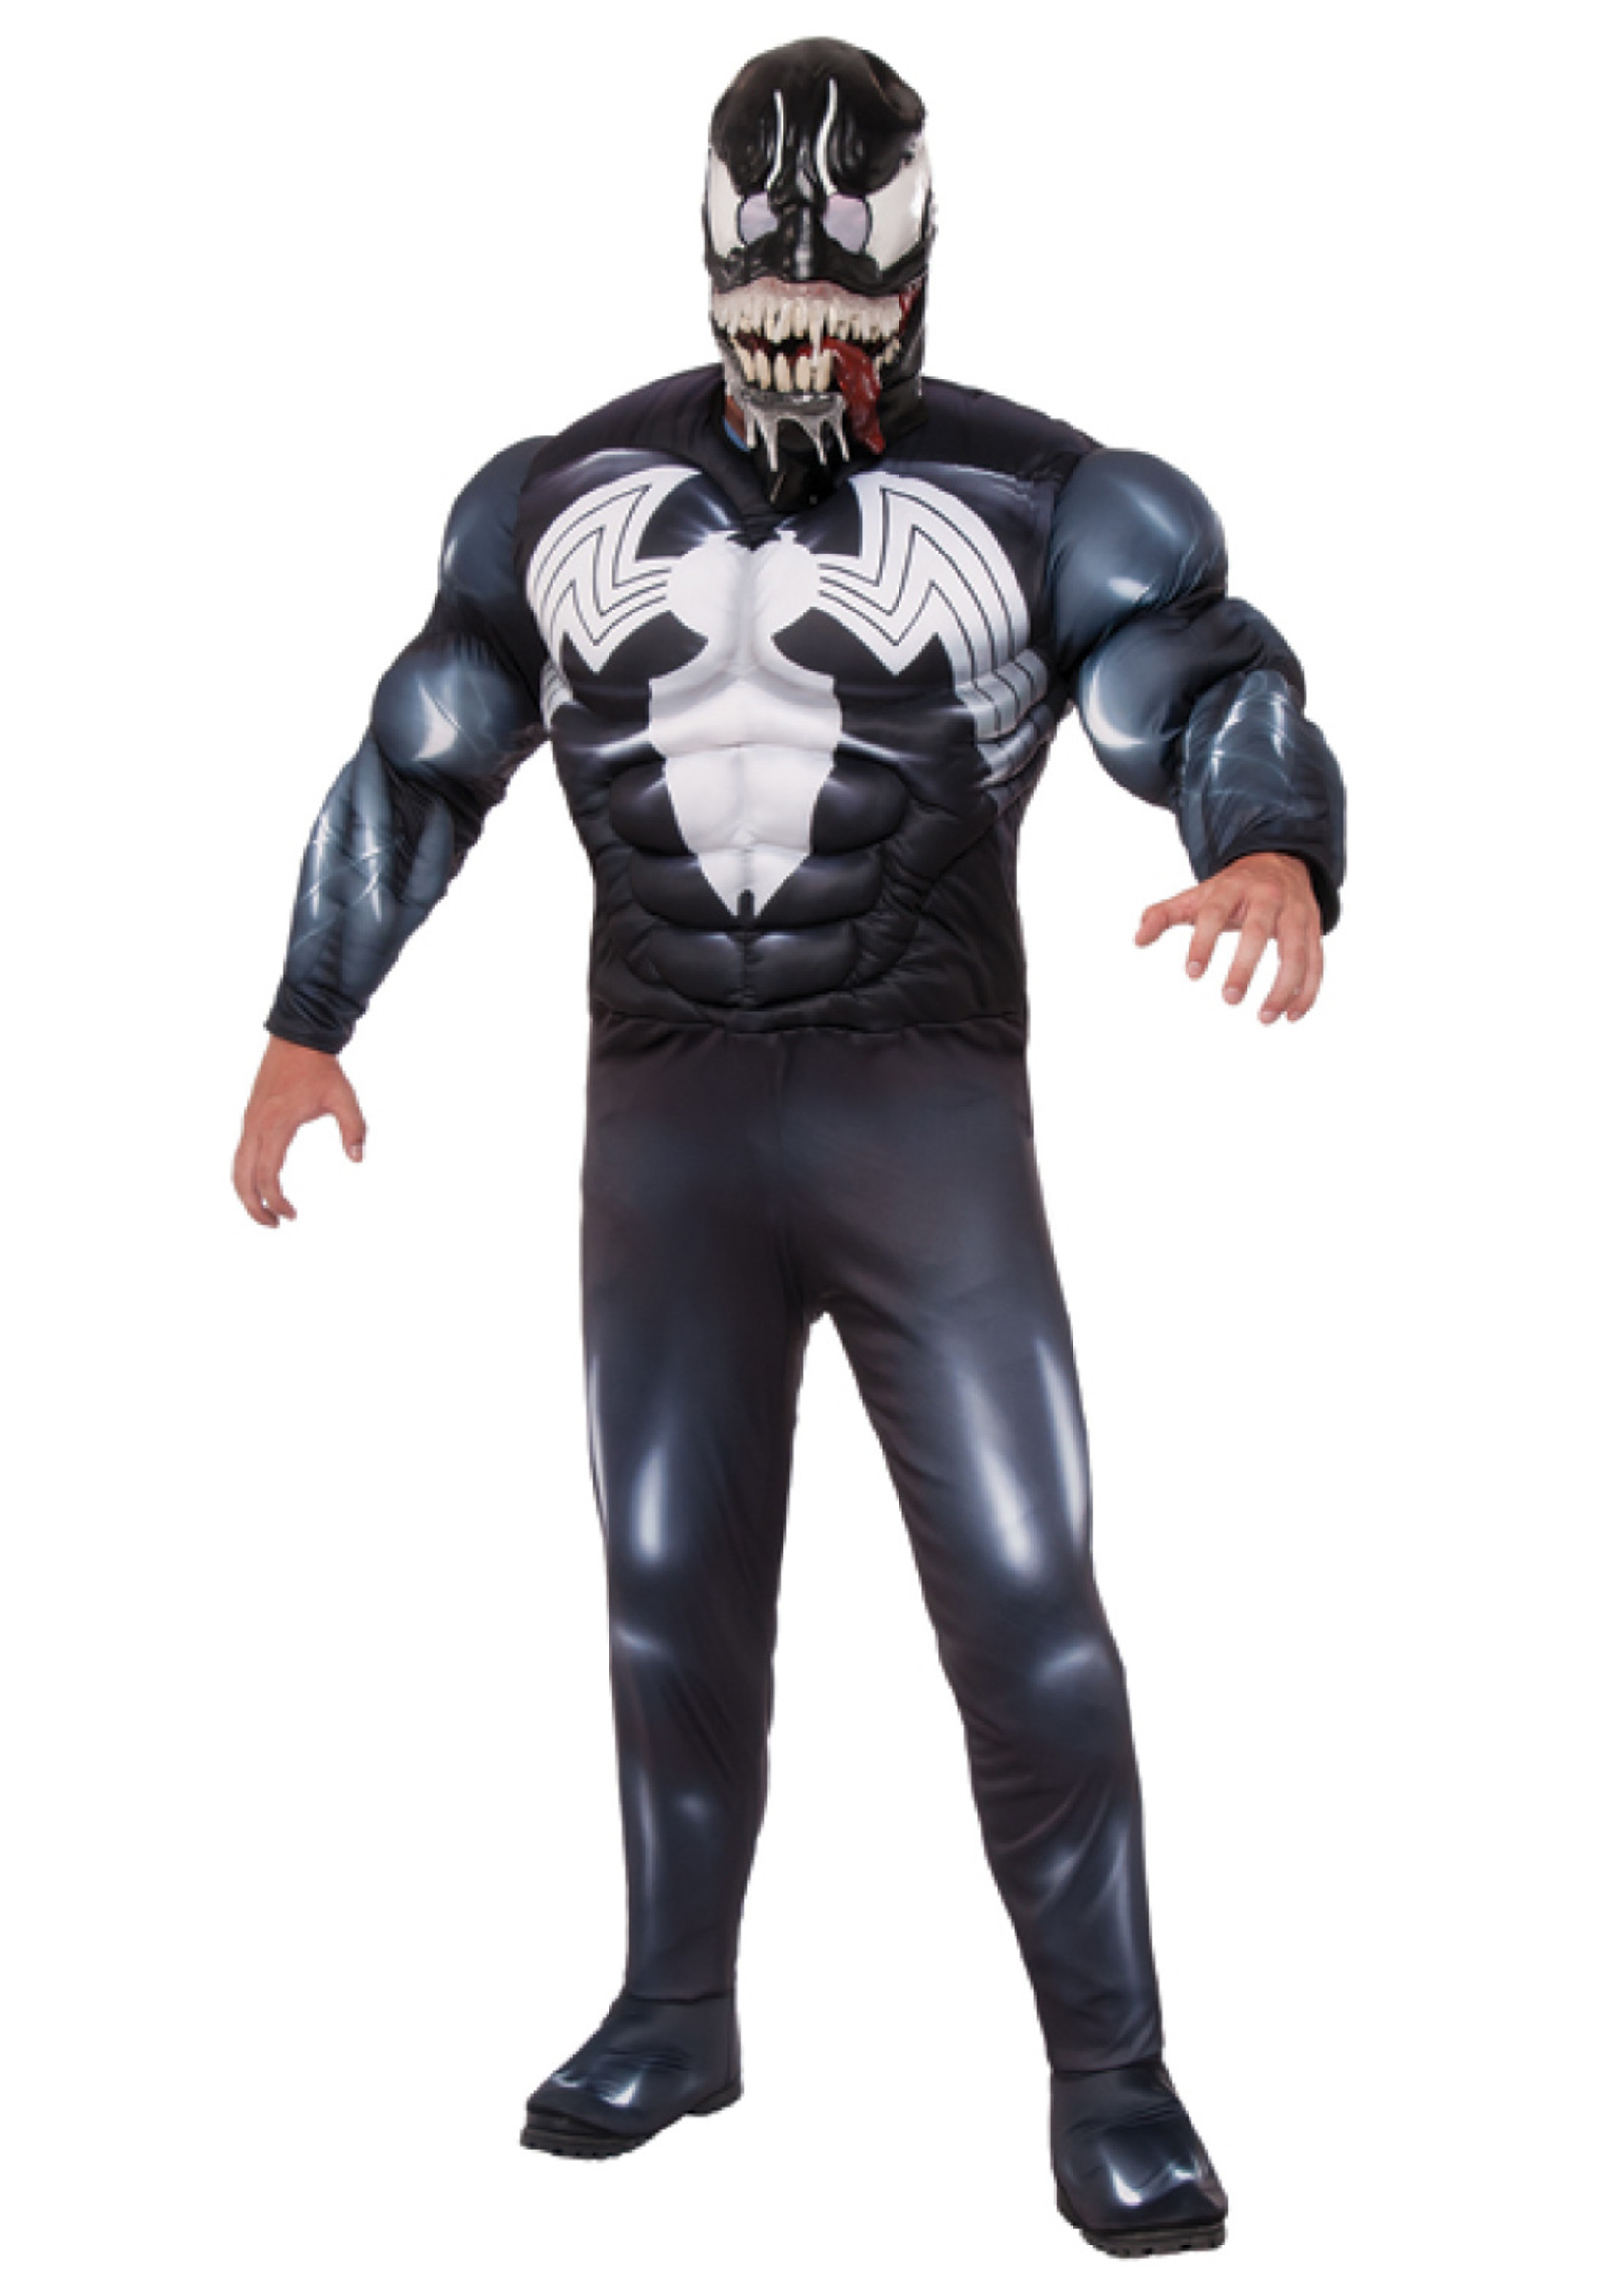 RUBIES Venom Costume - Men's